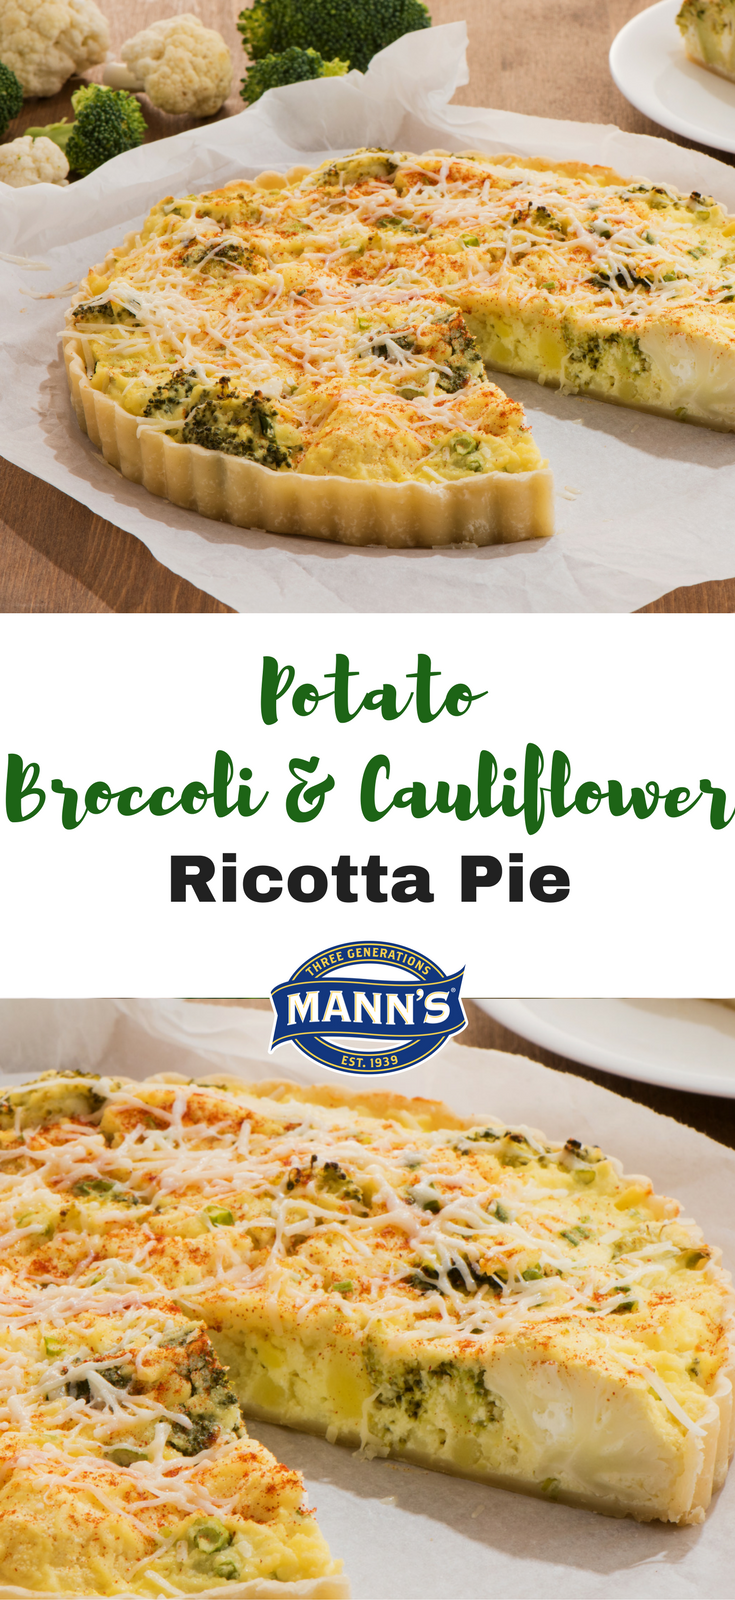 Potato, Broccoli & Cauliflower Ricotta Pie | Mann's Fresh Vegetables